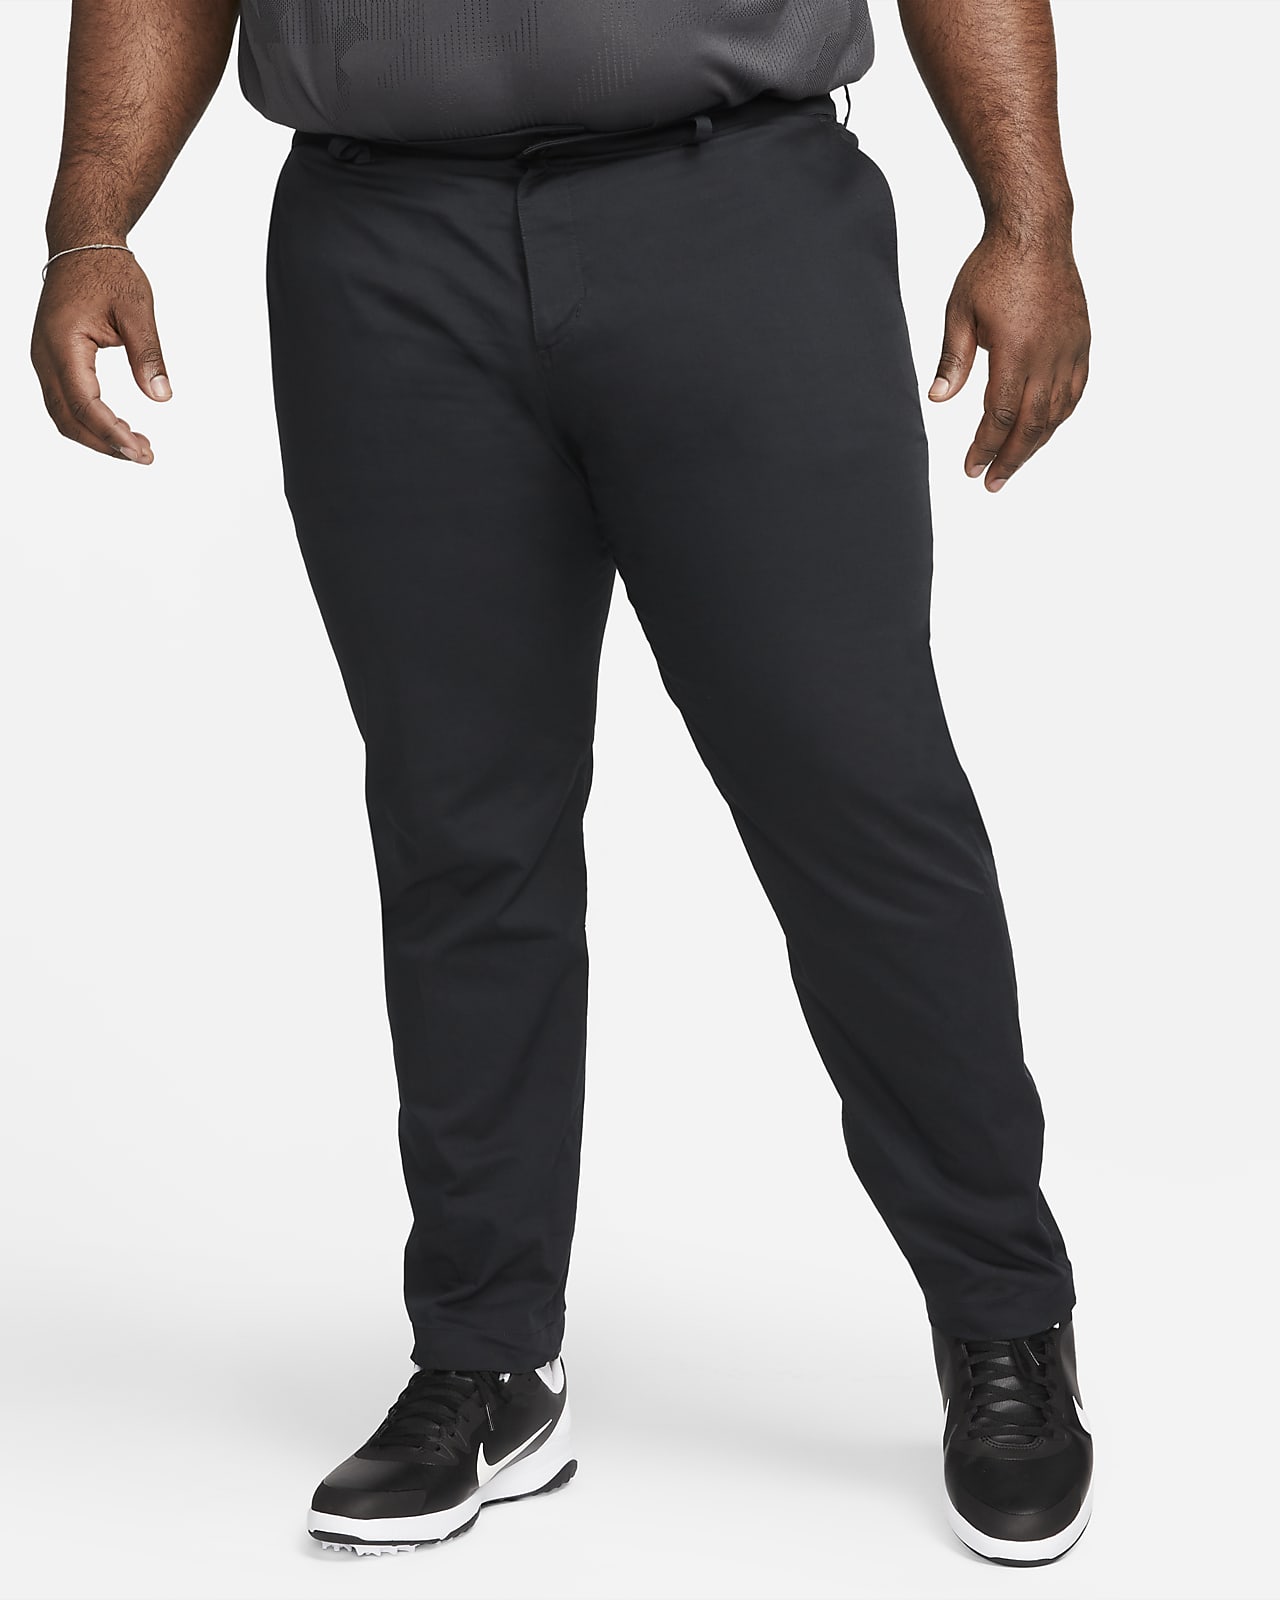 Black Nike Golf Pants (sz. M) - Ragstock.com